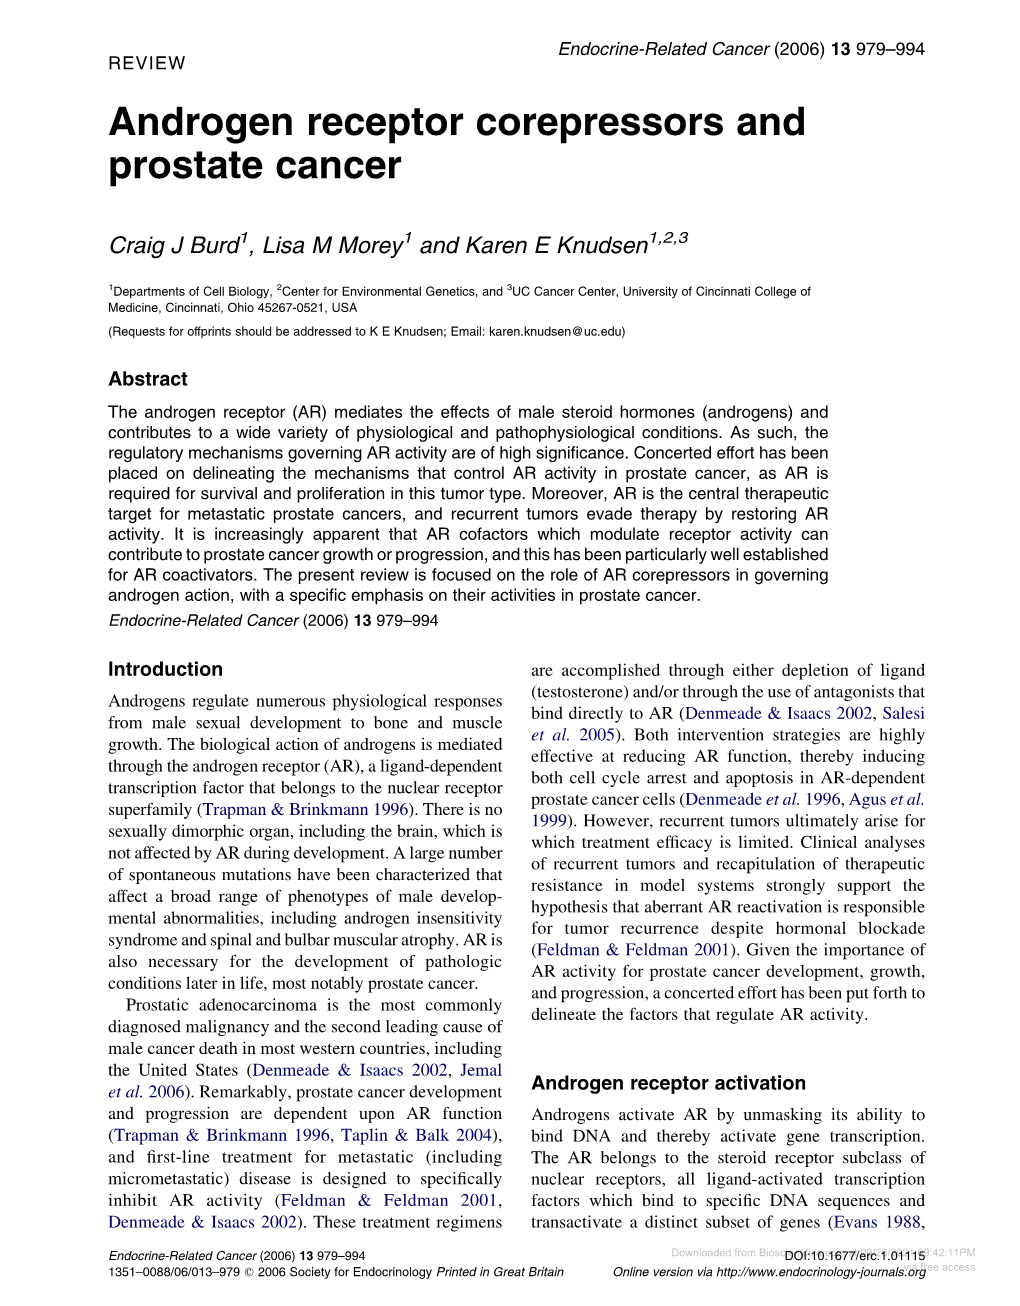 Androgen Receptor Corepressors and Prostate Cancer